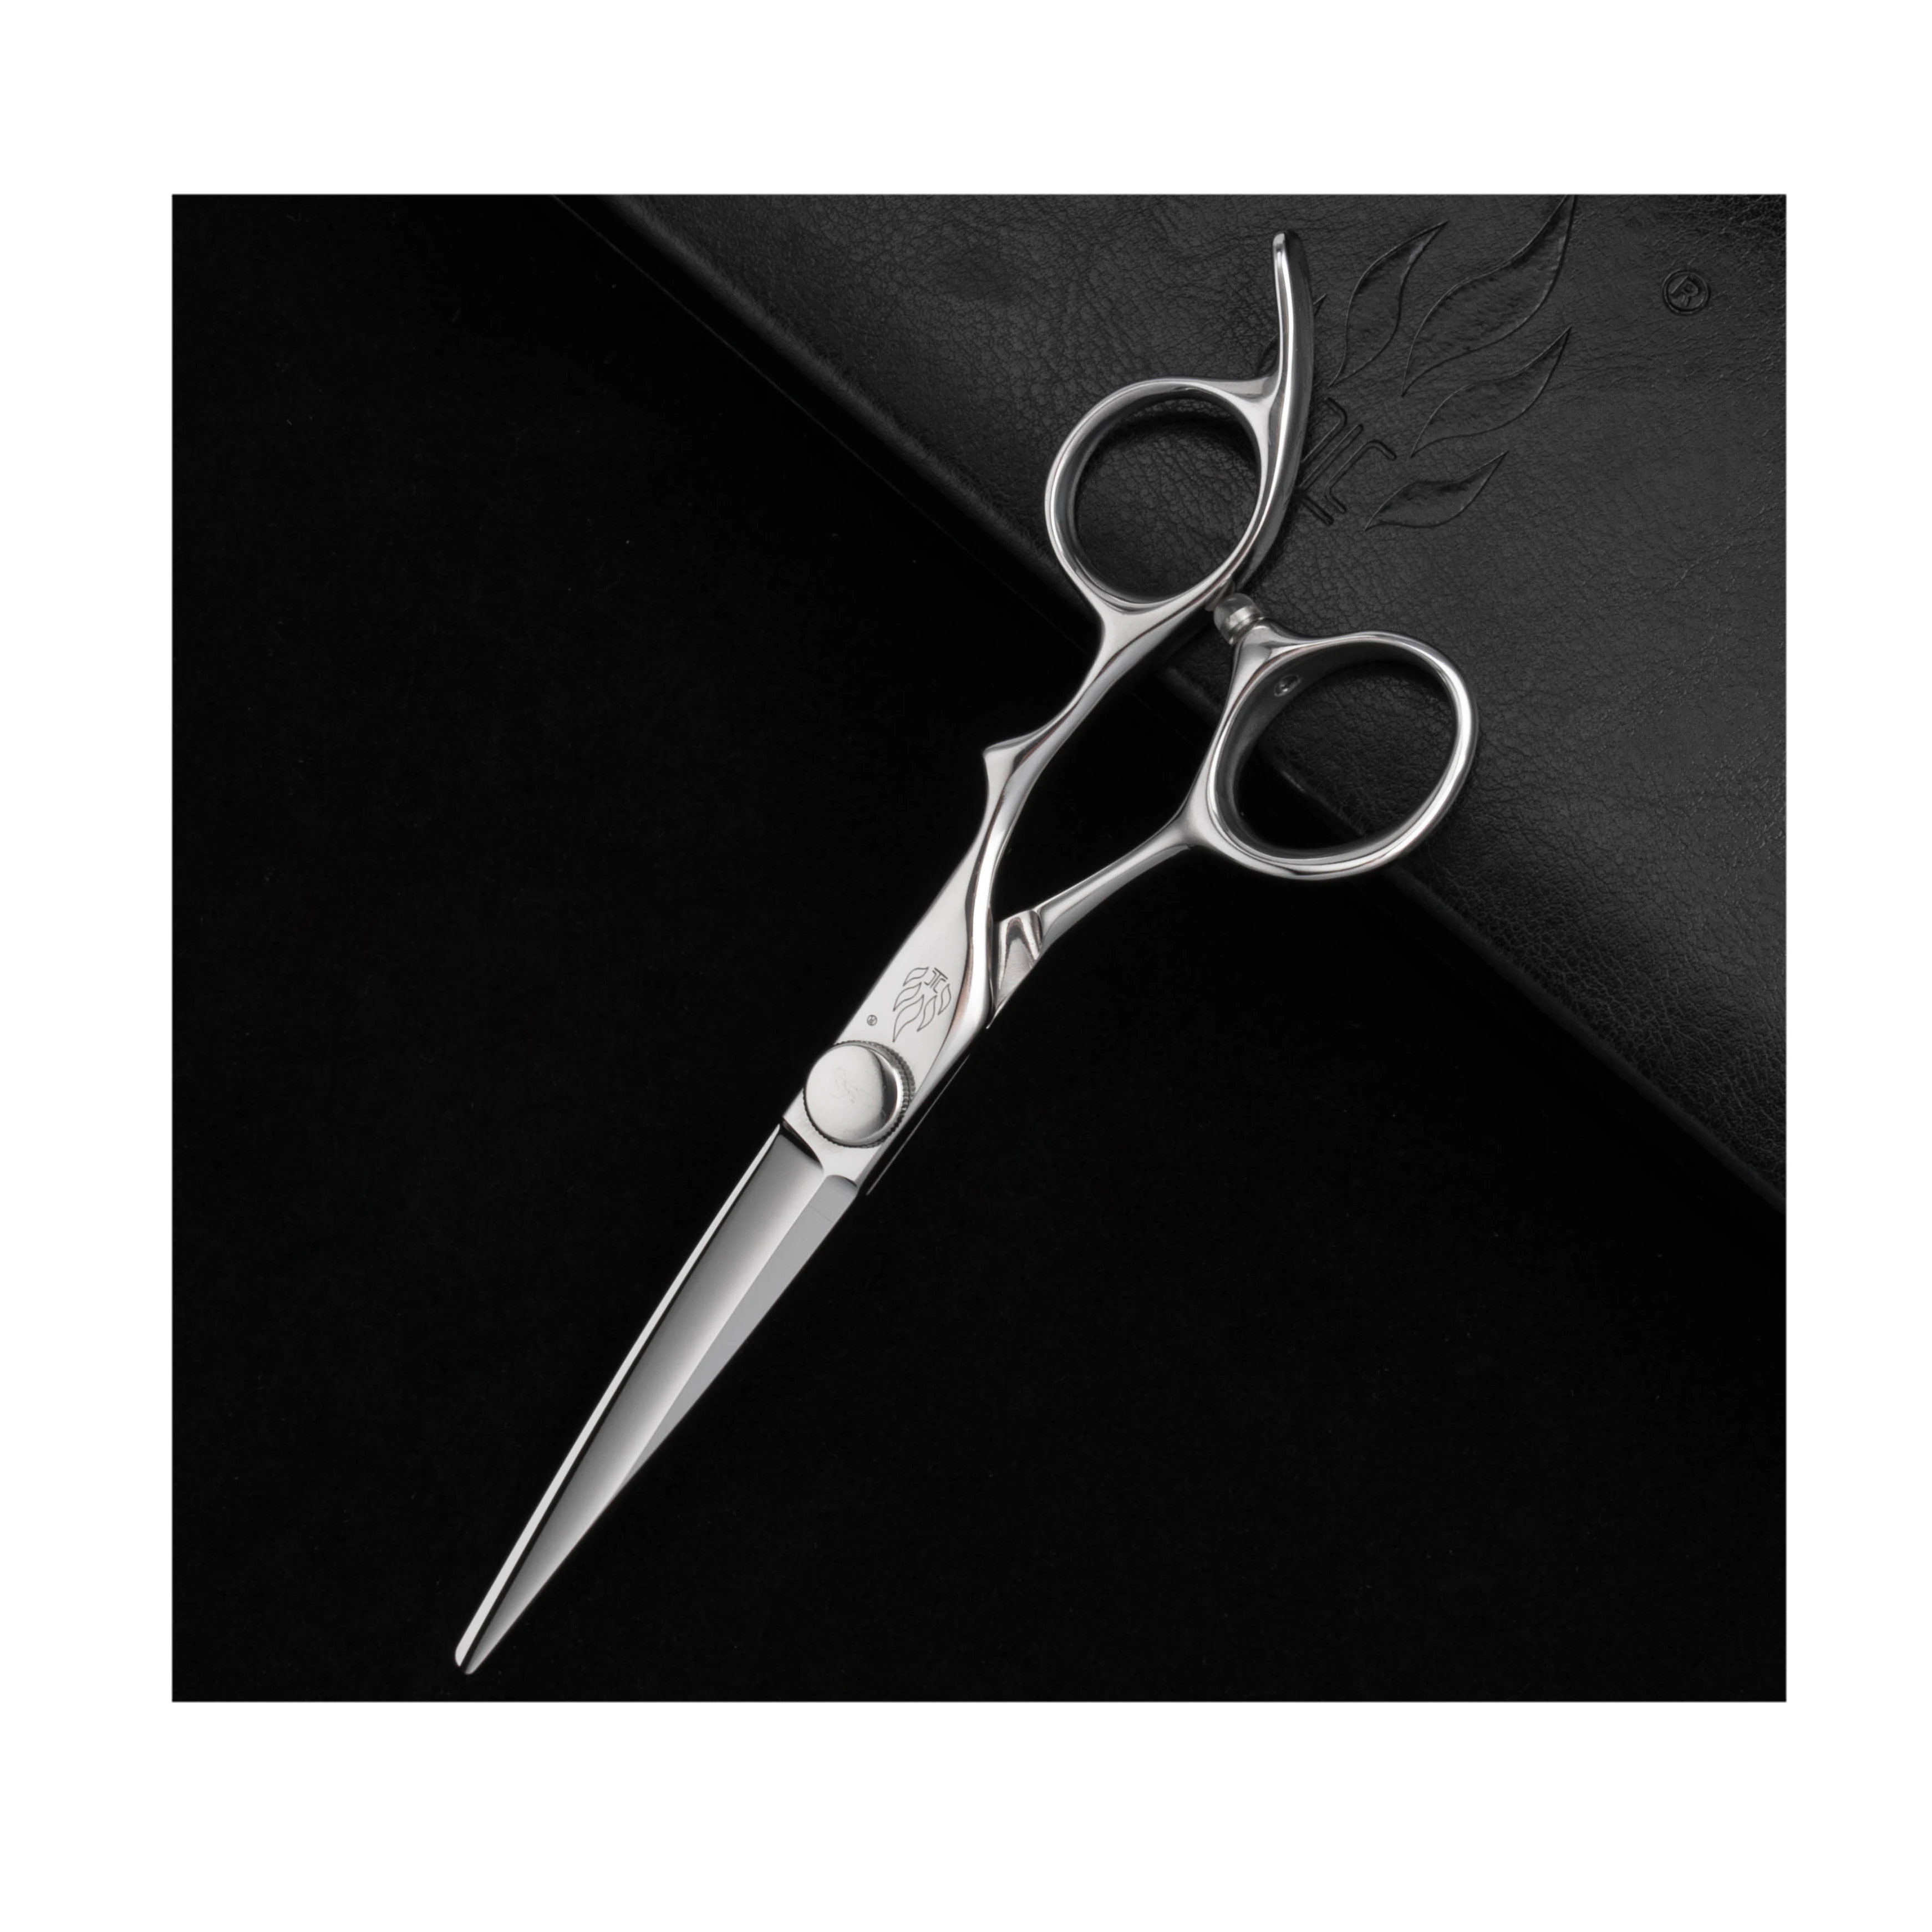 

Professional Barber Salon Hair Cutting Hairdressing Scissors Shears Sharp Straight made of Japanese Stainless Steel vg1 Razor